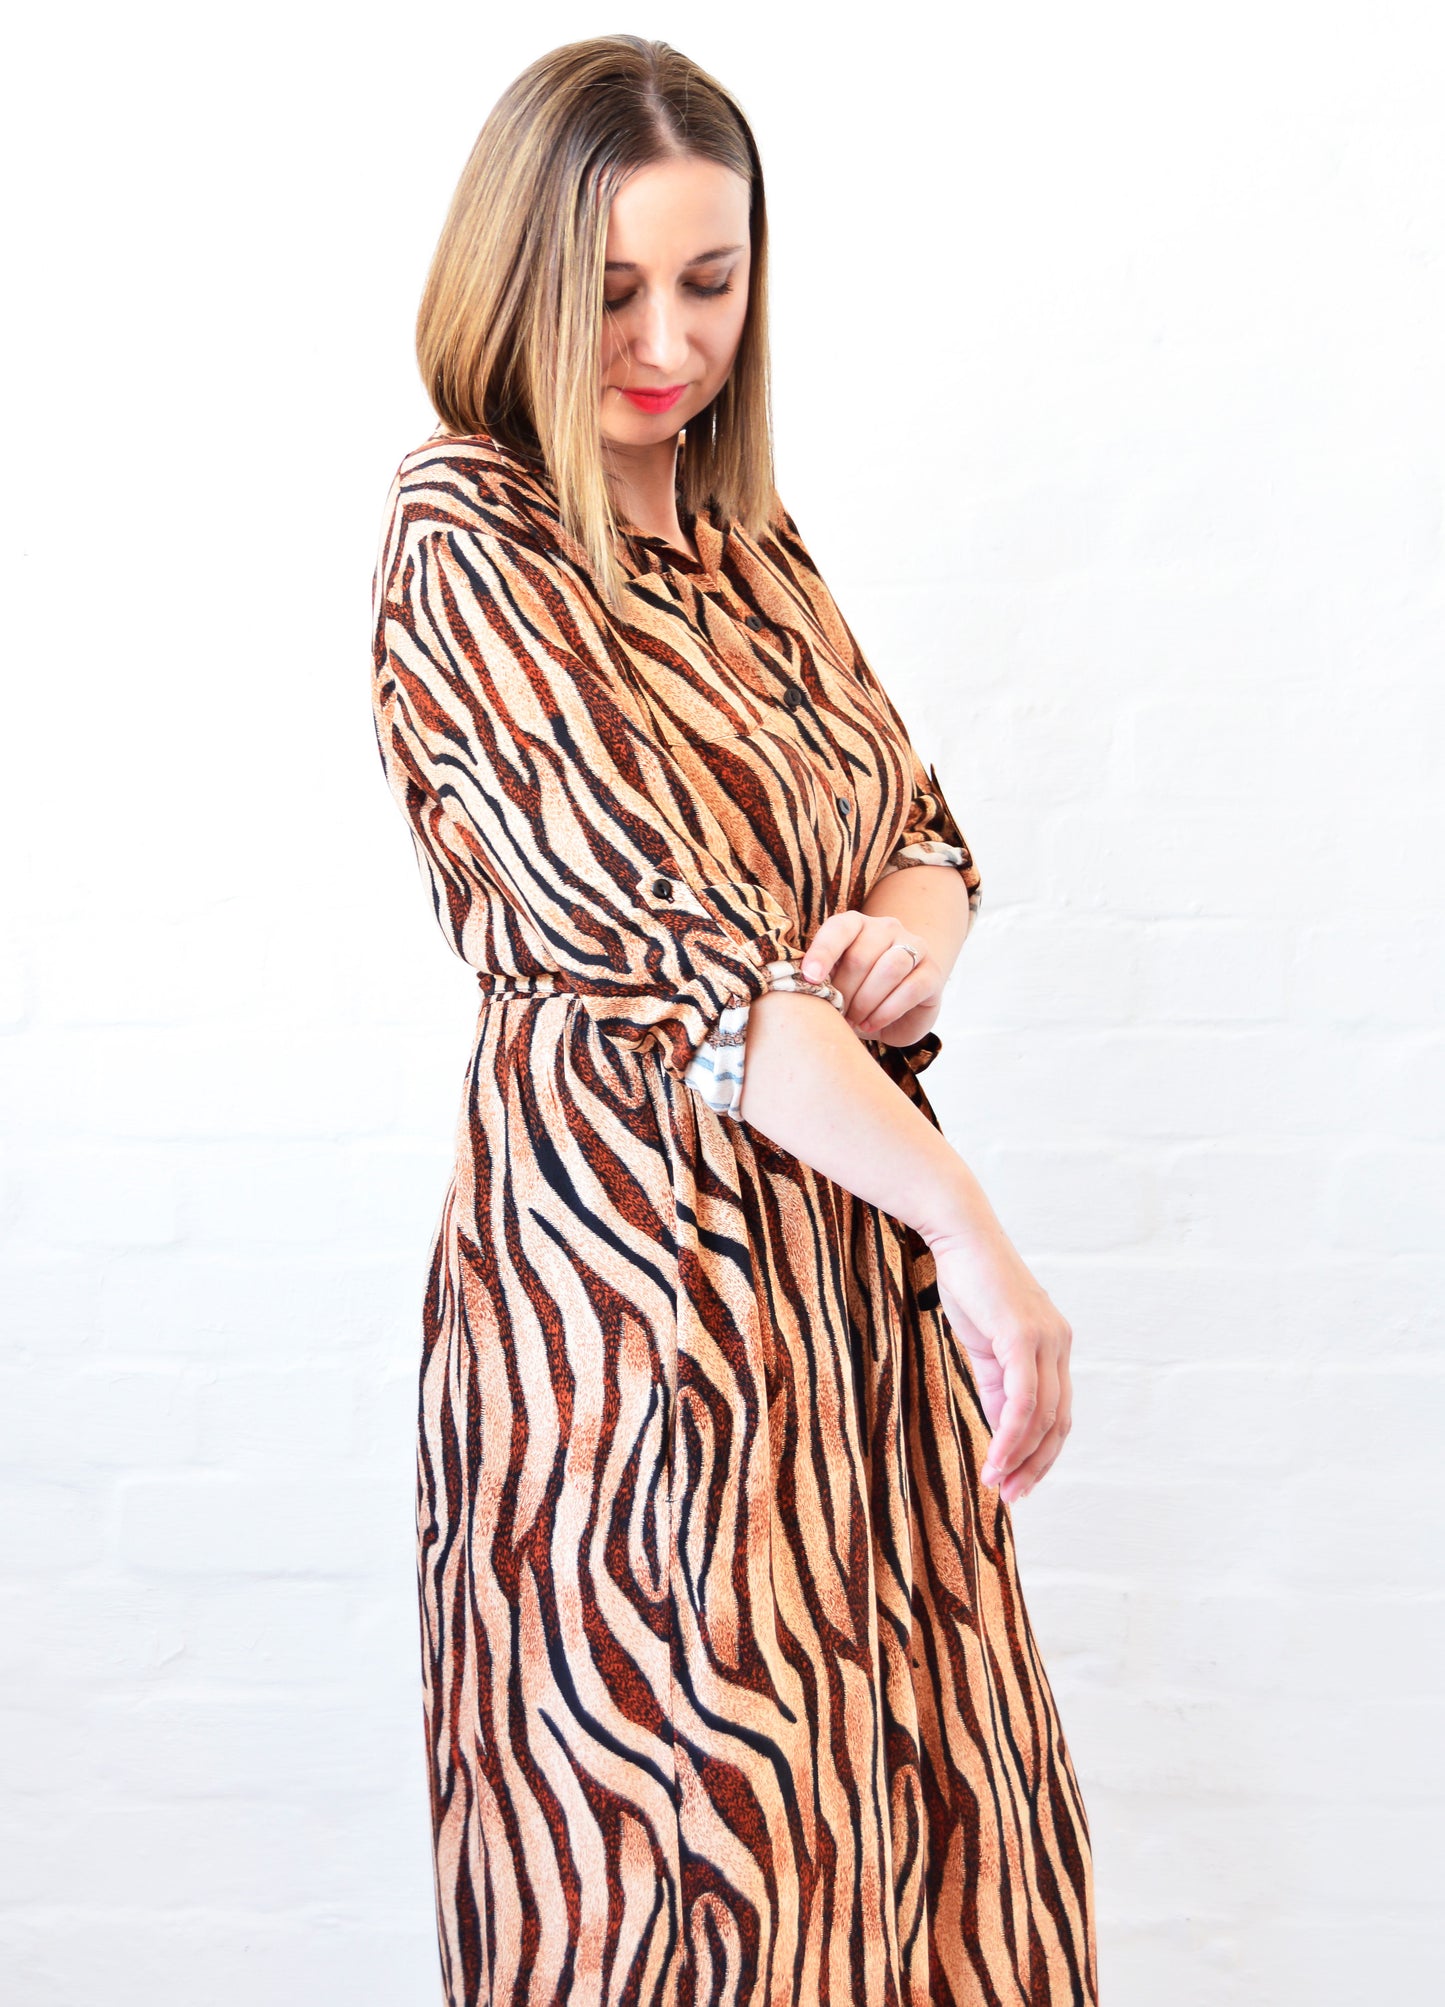 Ivy Shirt Dress in caramel Tiger Wave print